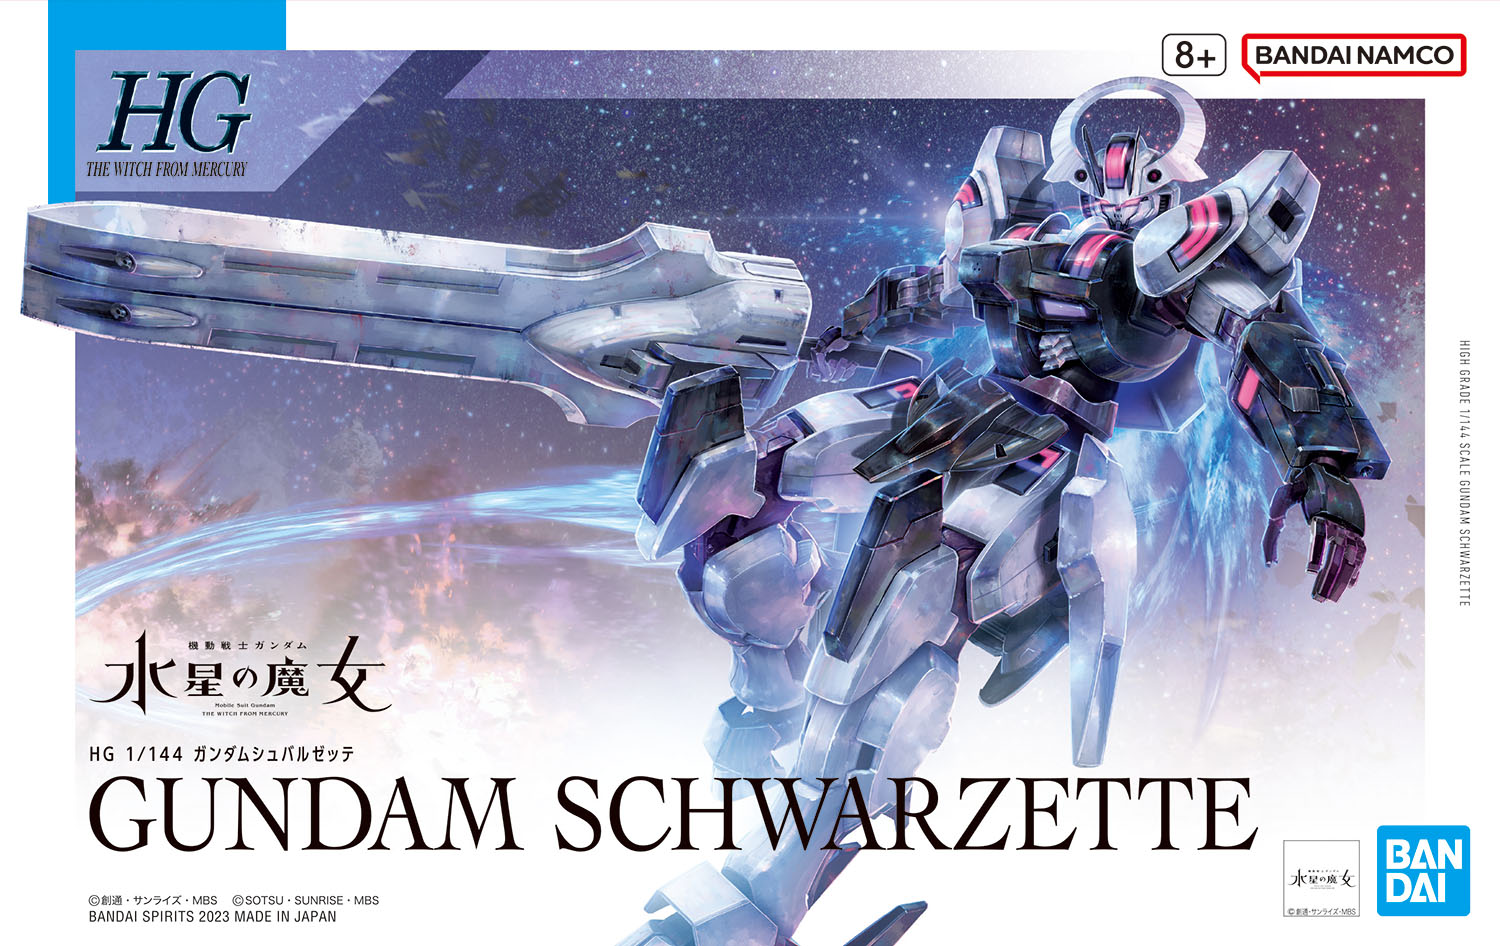 1/100 High Grade Gundam Wing Model Series, The Gundam Wiki